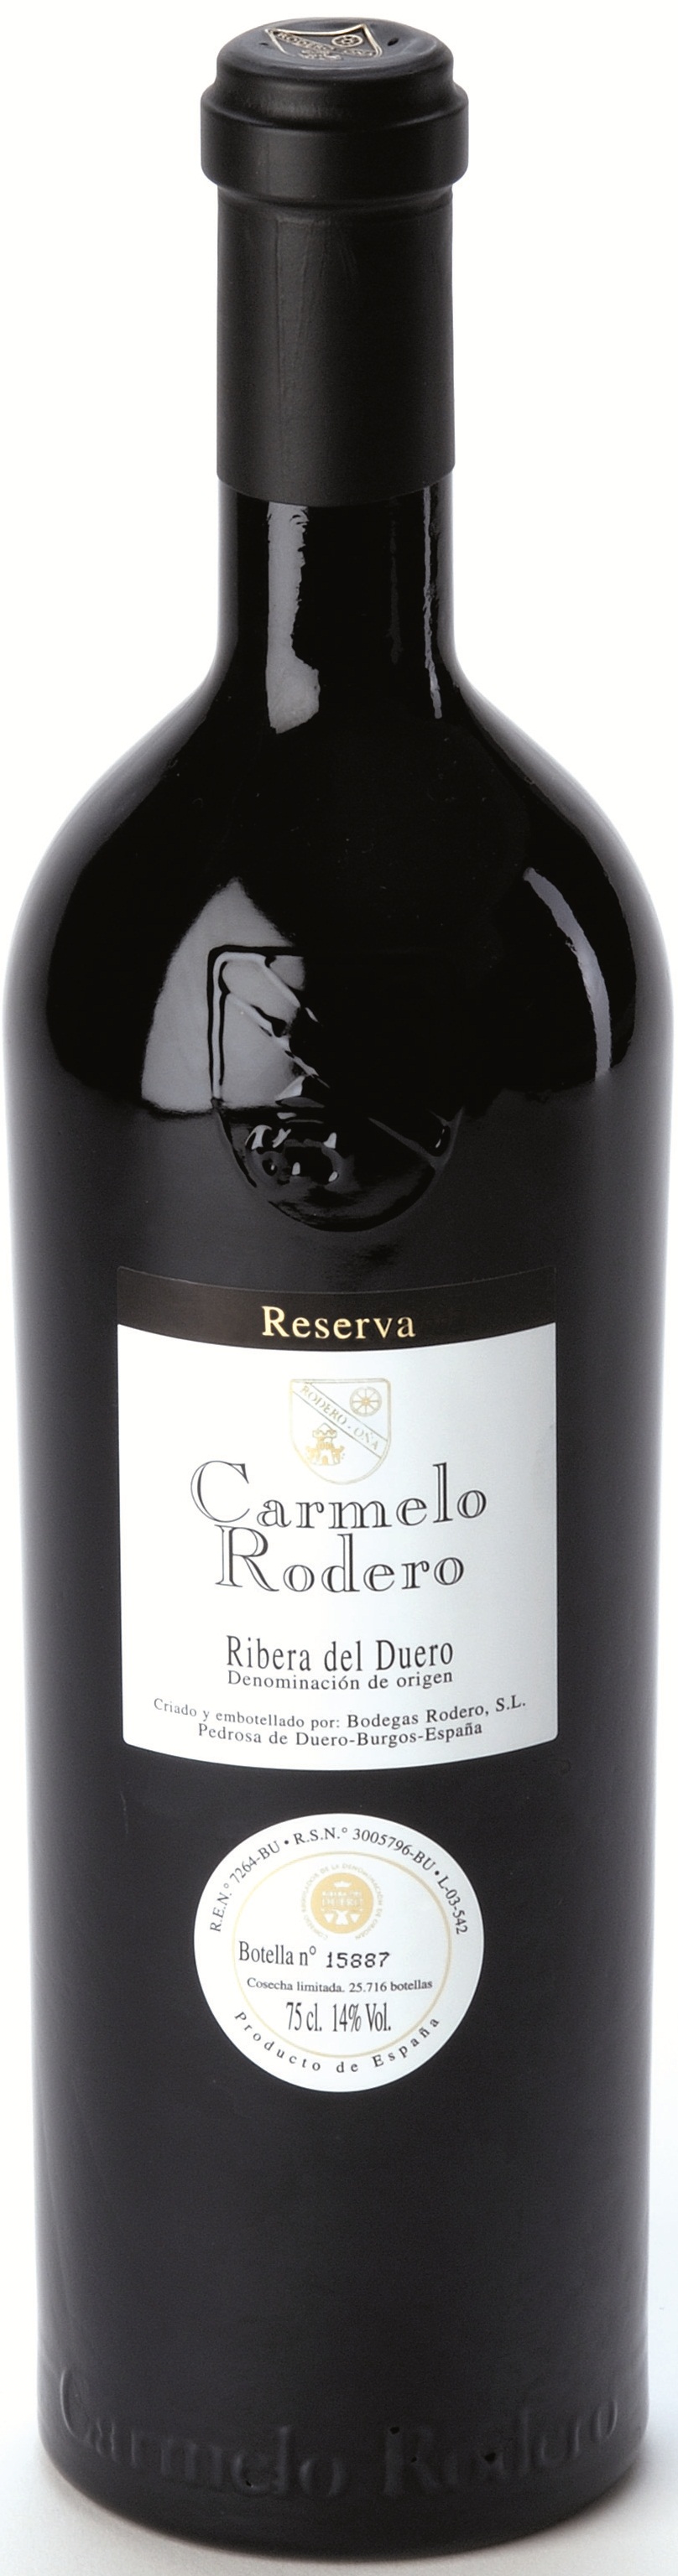 Image of Wine bottle Carmelo Rodero Reserva